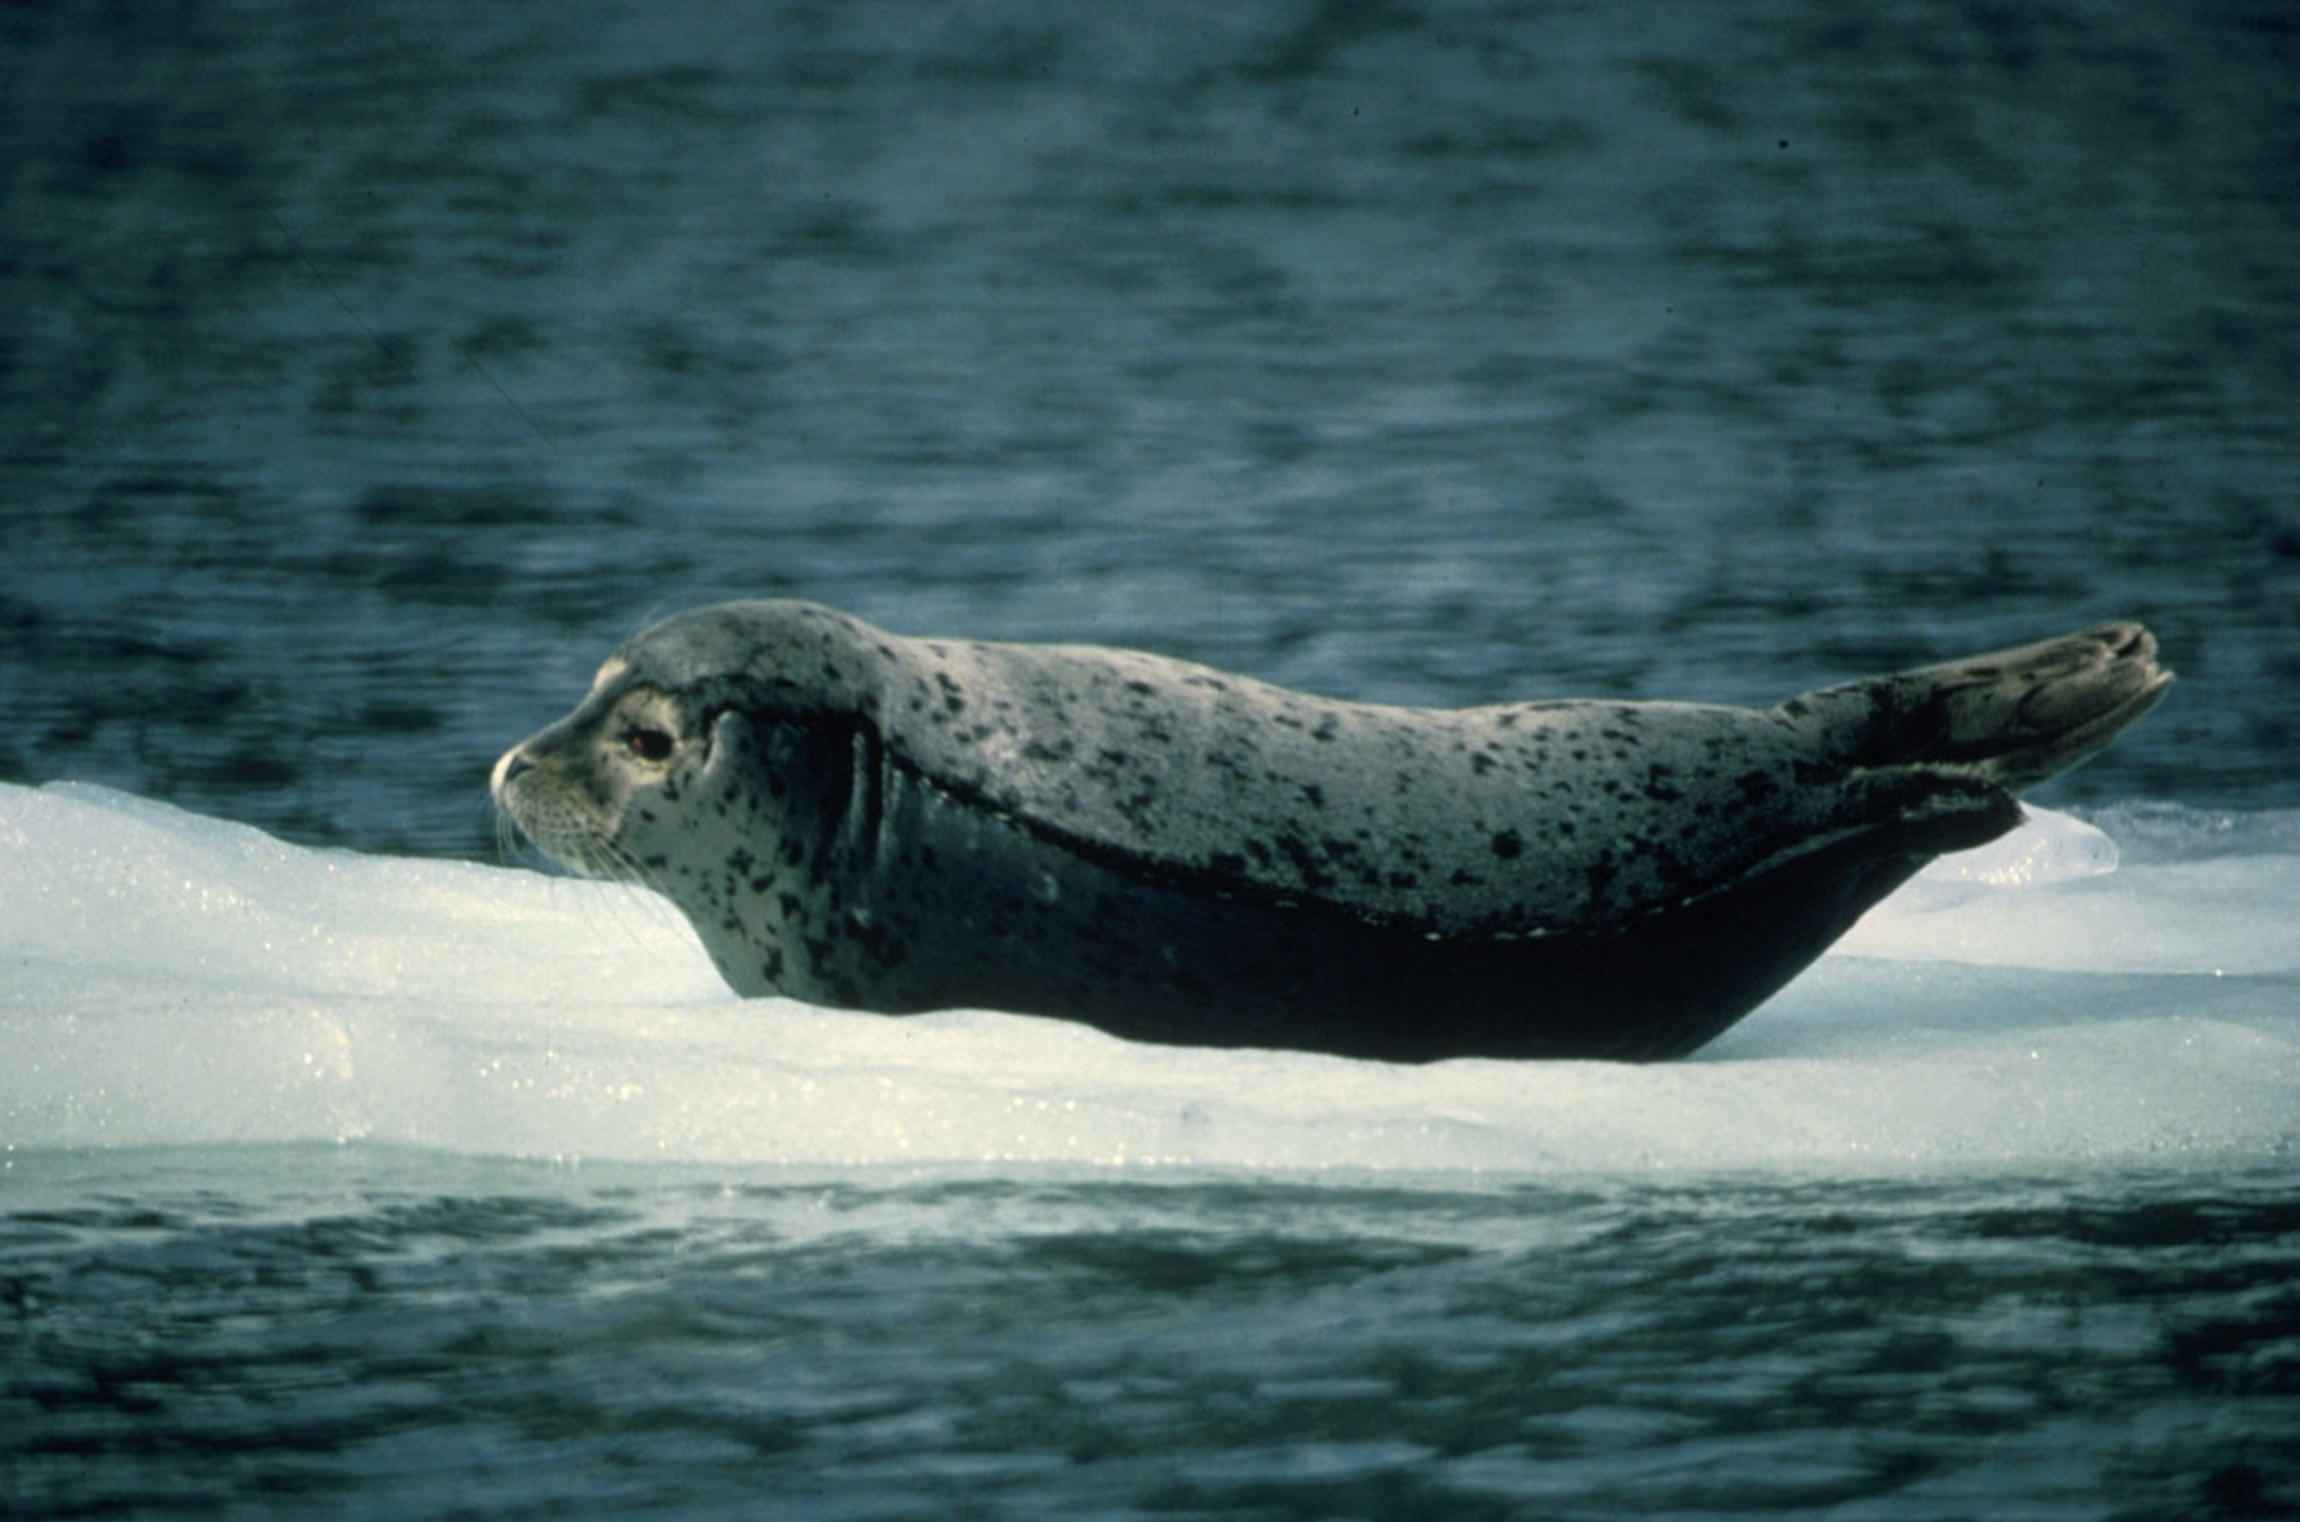 Harbor seal free image, public domain image